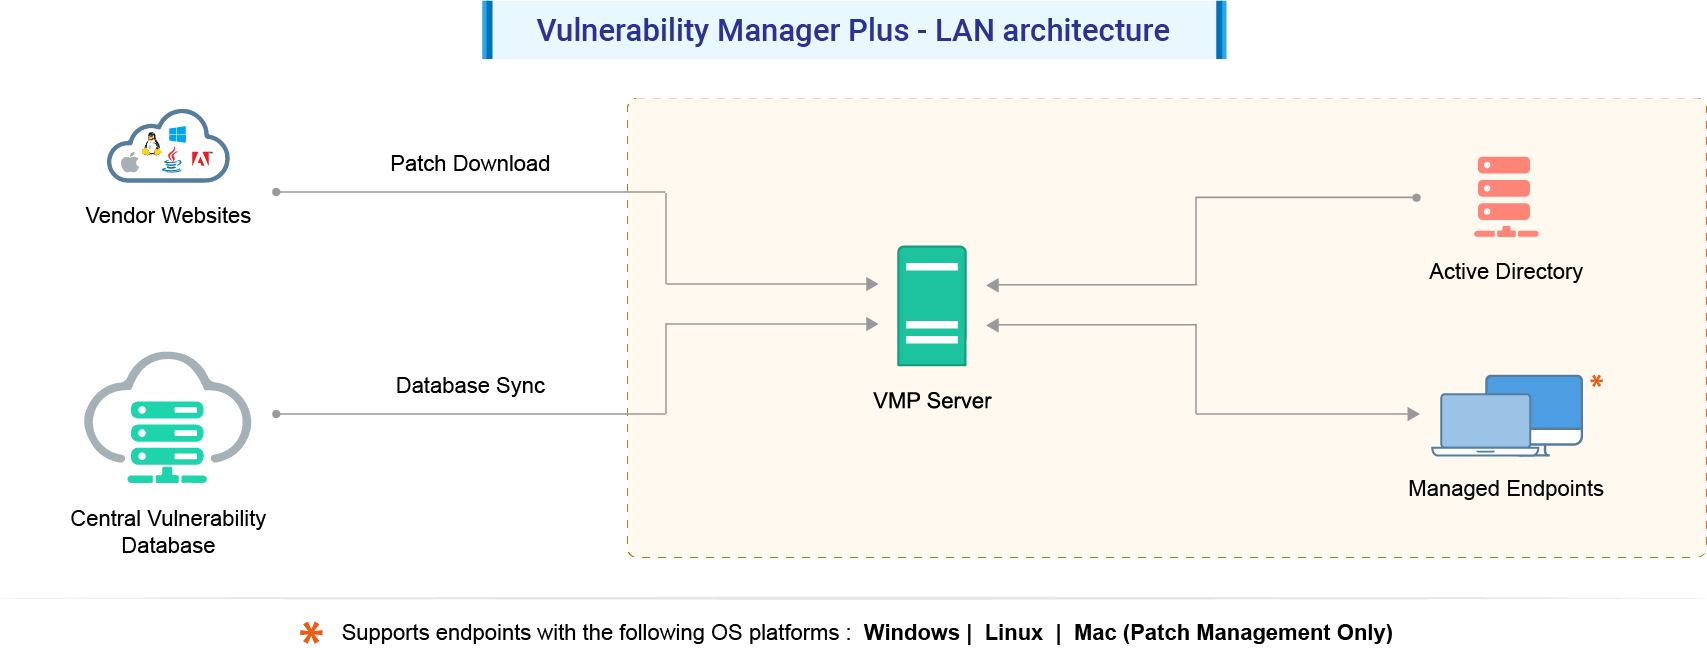 Vulnerability Management Architecture | ManageEngine